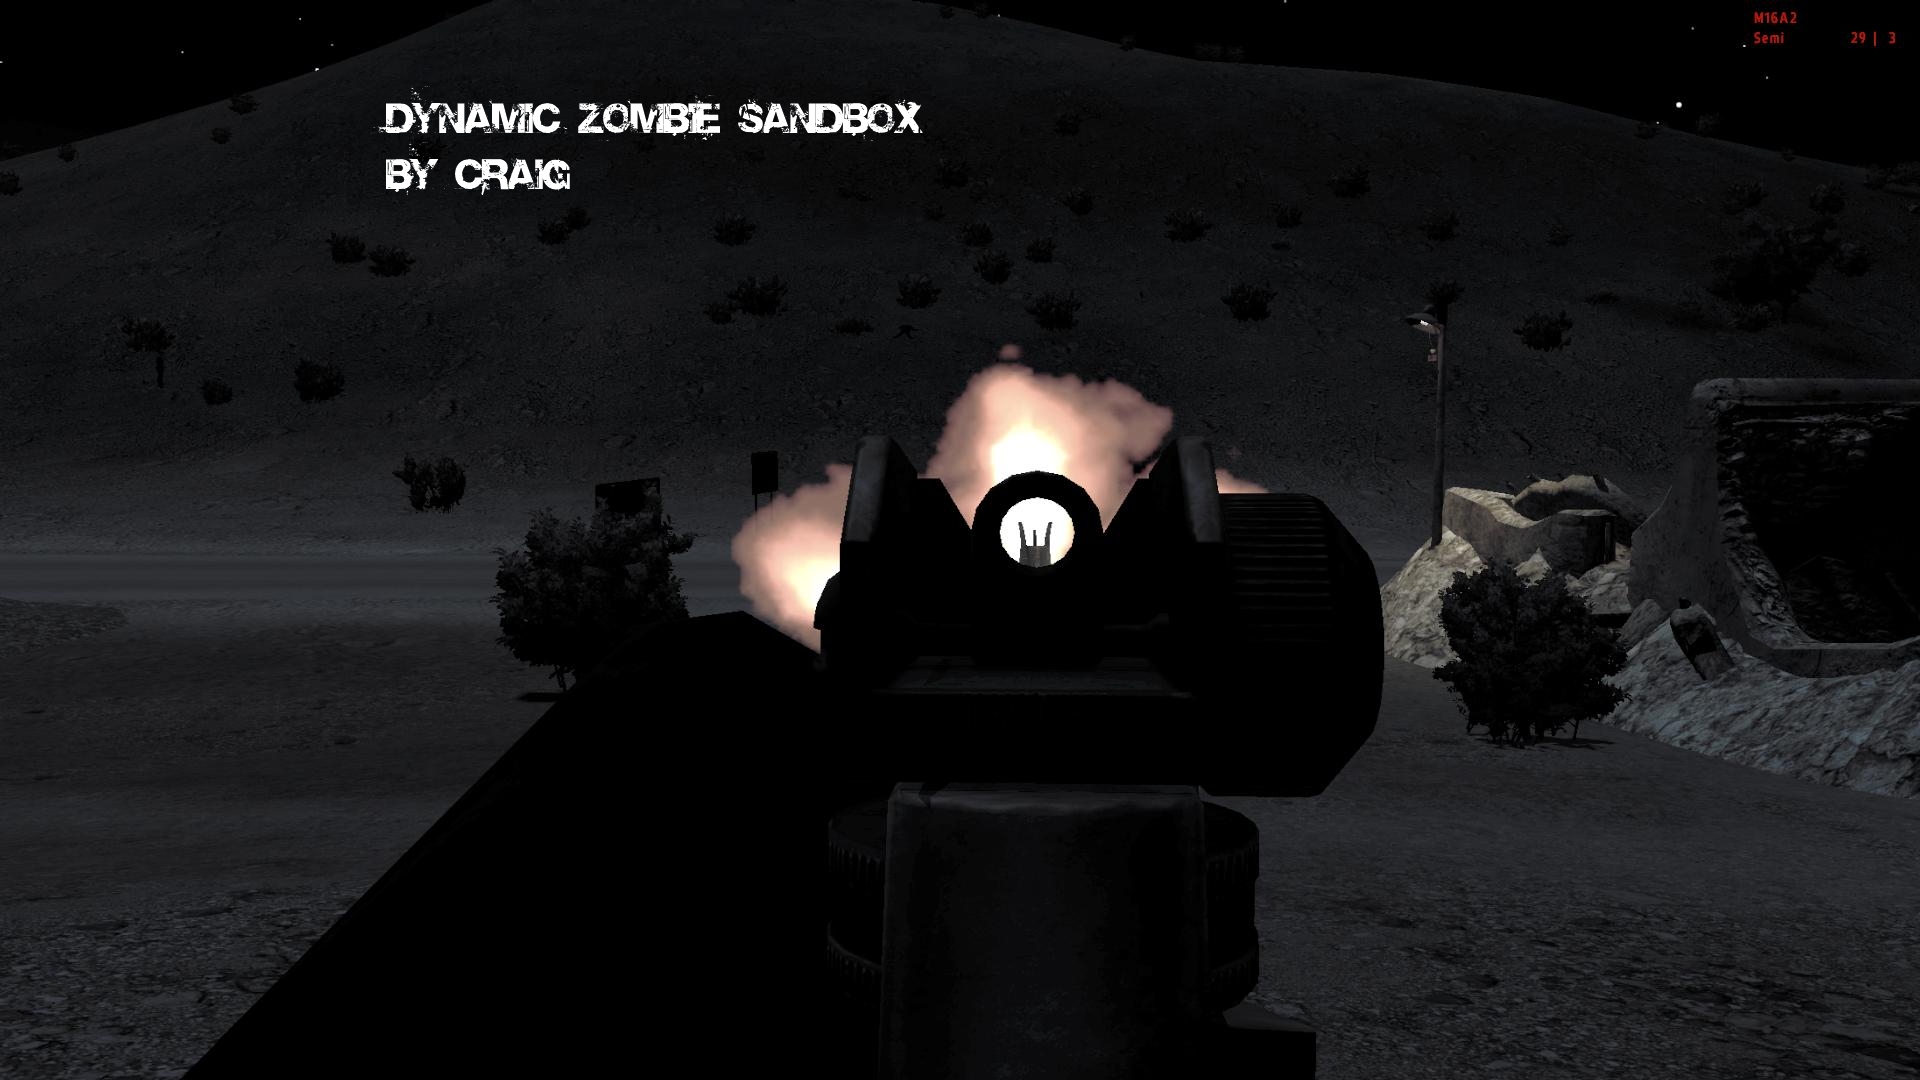 arma 2 free dynamic zombie sandbox download